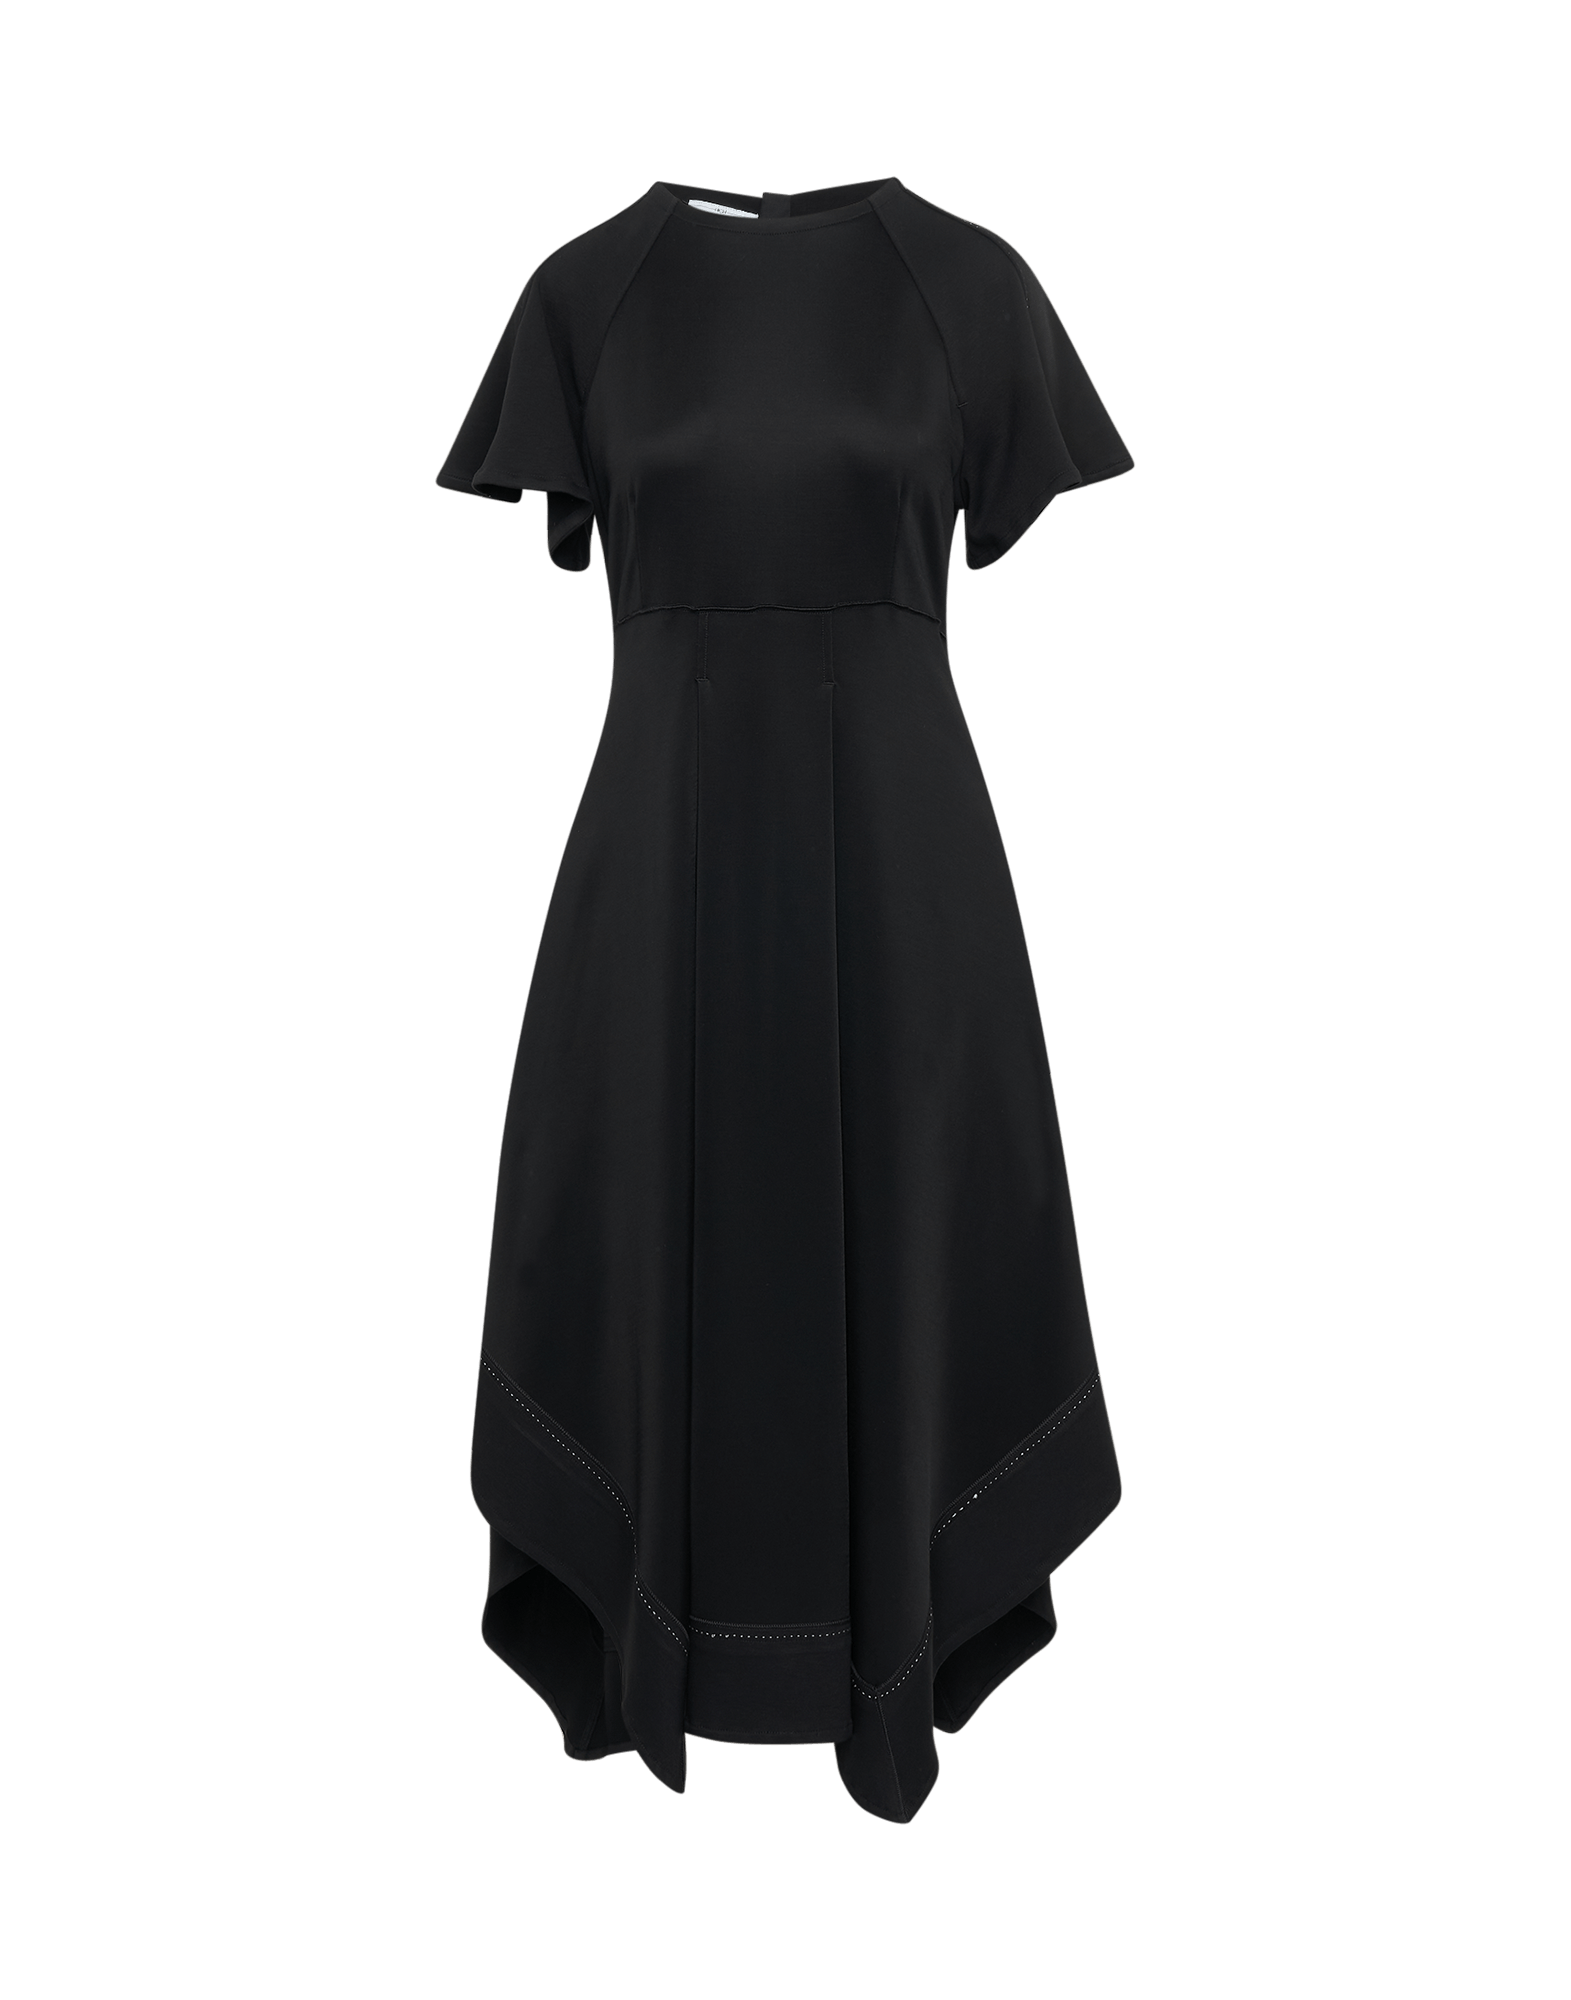 Buy Women's Fit & Flare Body Con Black Dress Online at Bewakoof